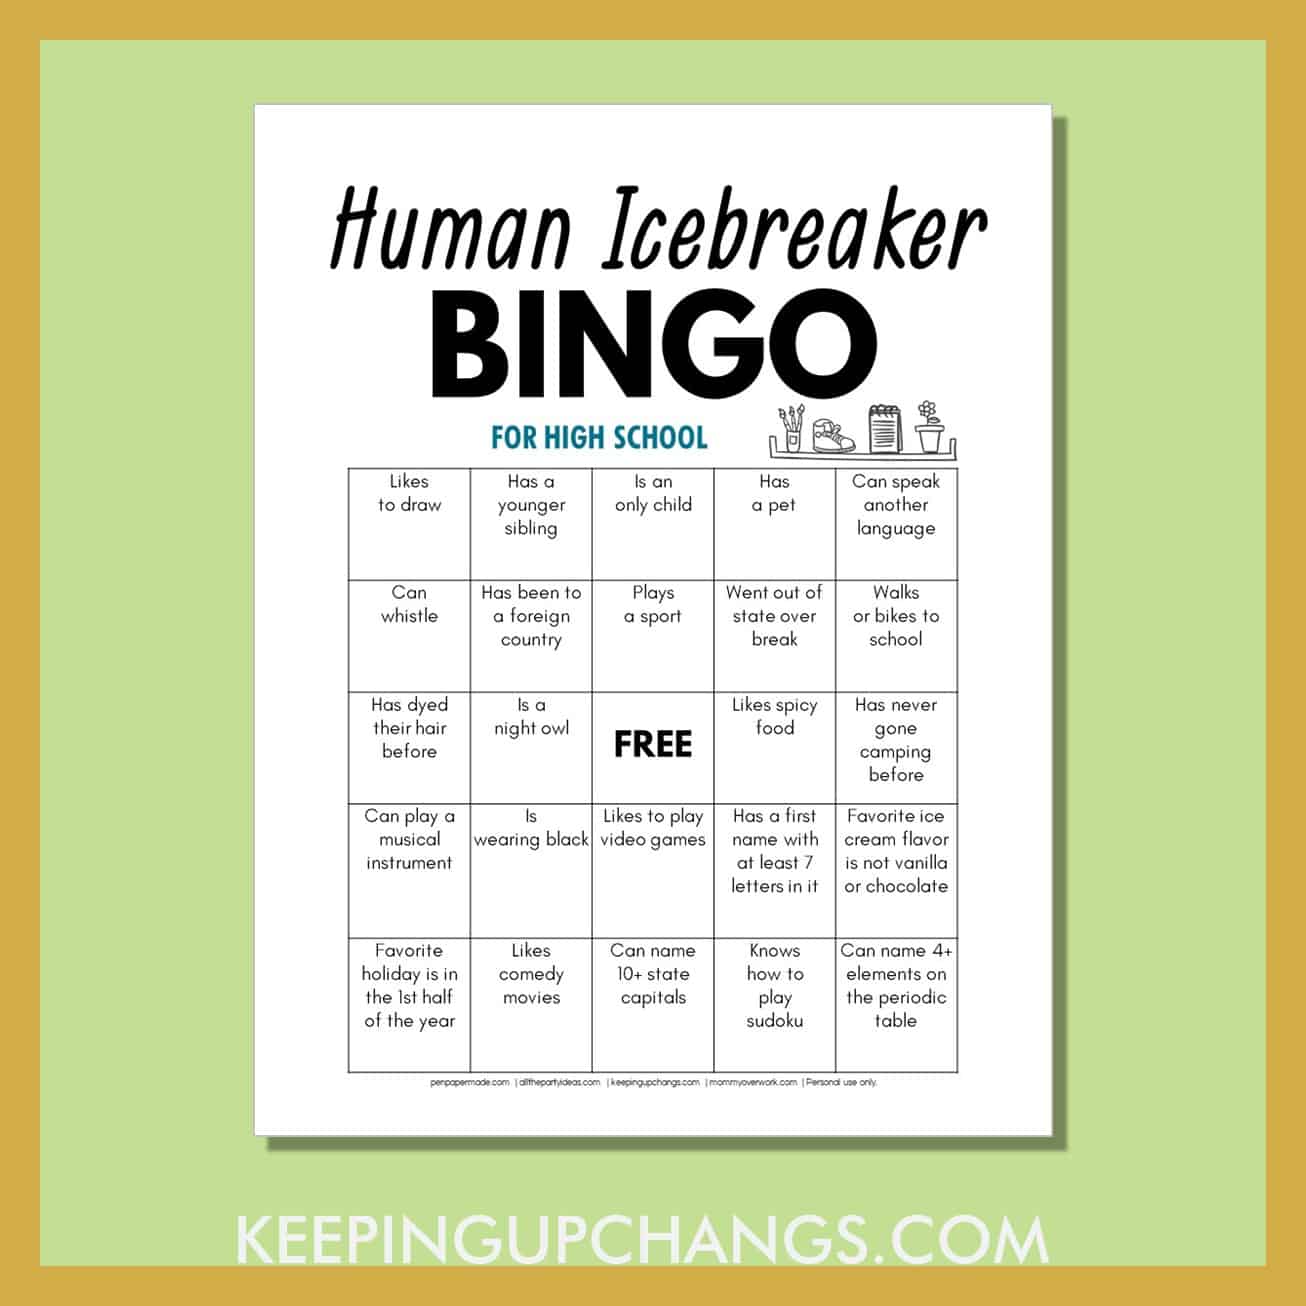 human high school icebreaker bingo with fun getting to know you facts.